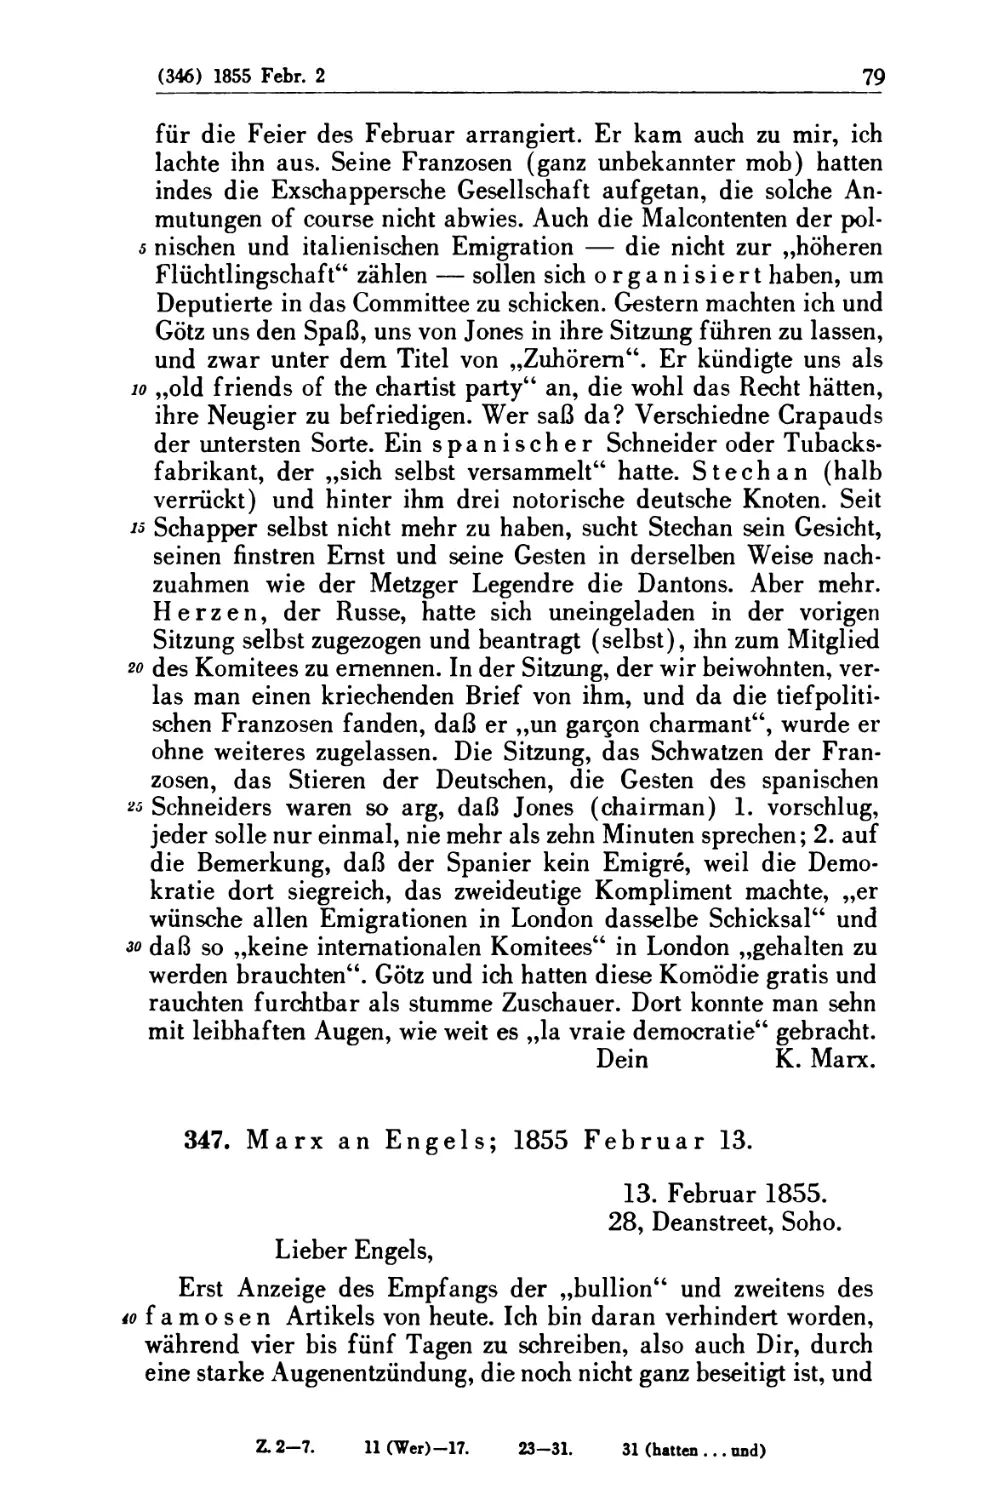 347. Marx an Engels; 1855 Februar 13